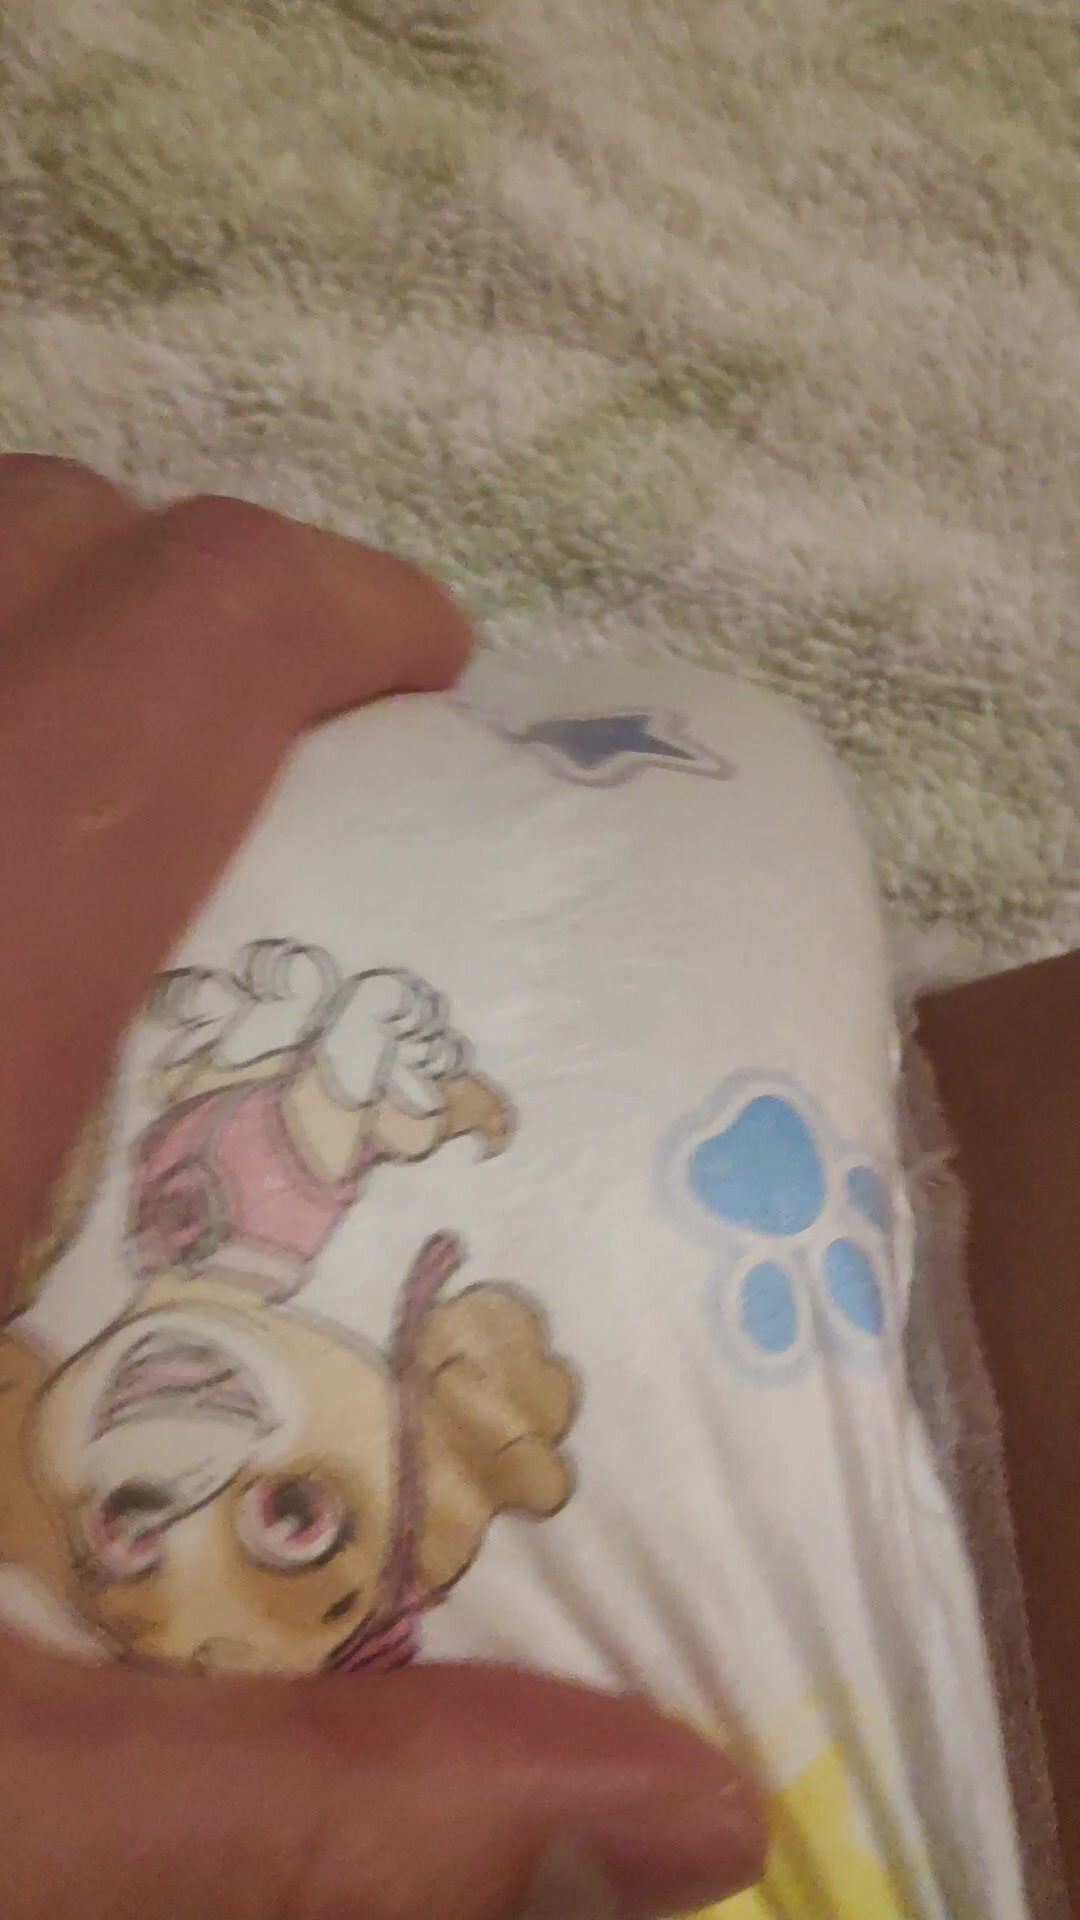 Keeping Rubbing my pee soaked patrol Paw Pampers diaper